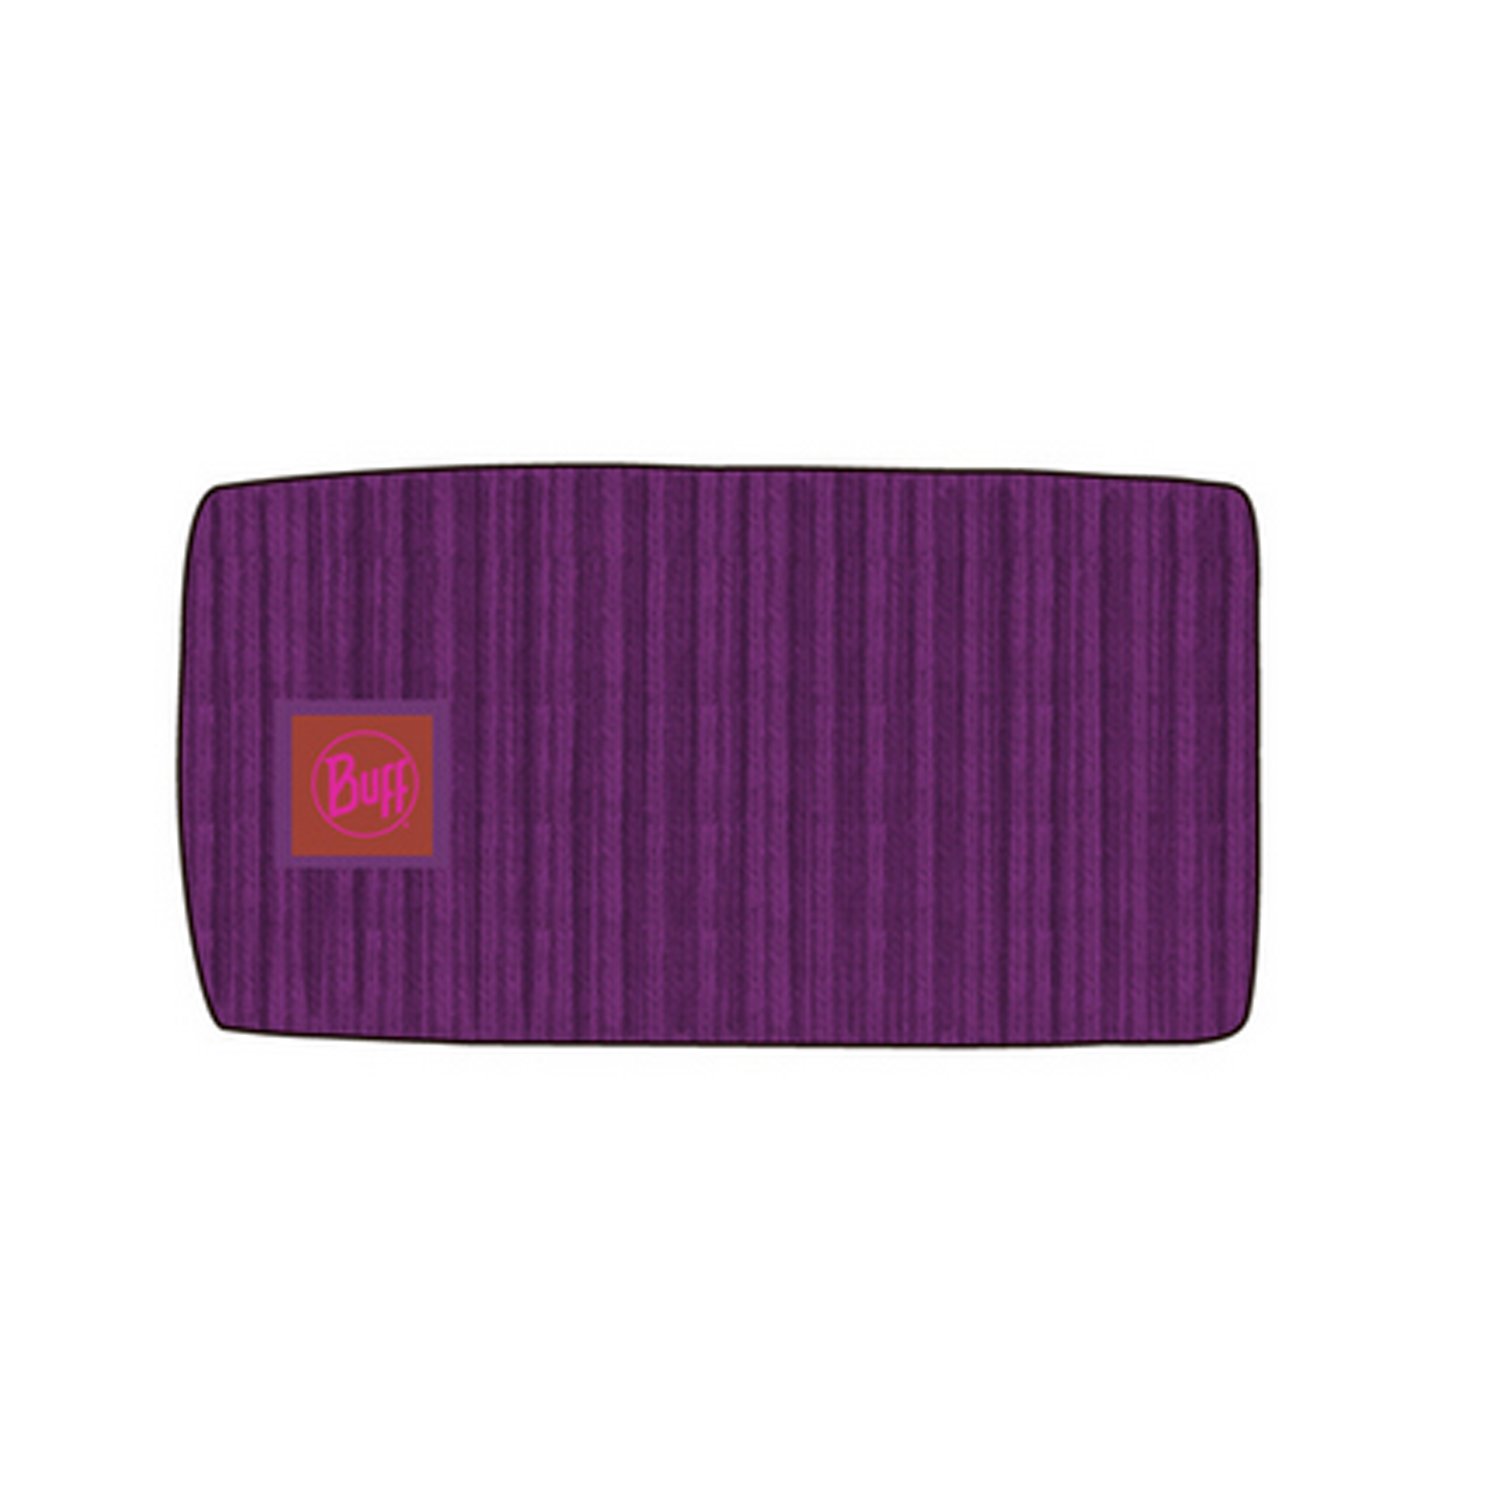 Повязка Buff Crossknit Headband, унисекс, фиолетовая, 126484.605.10.00